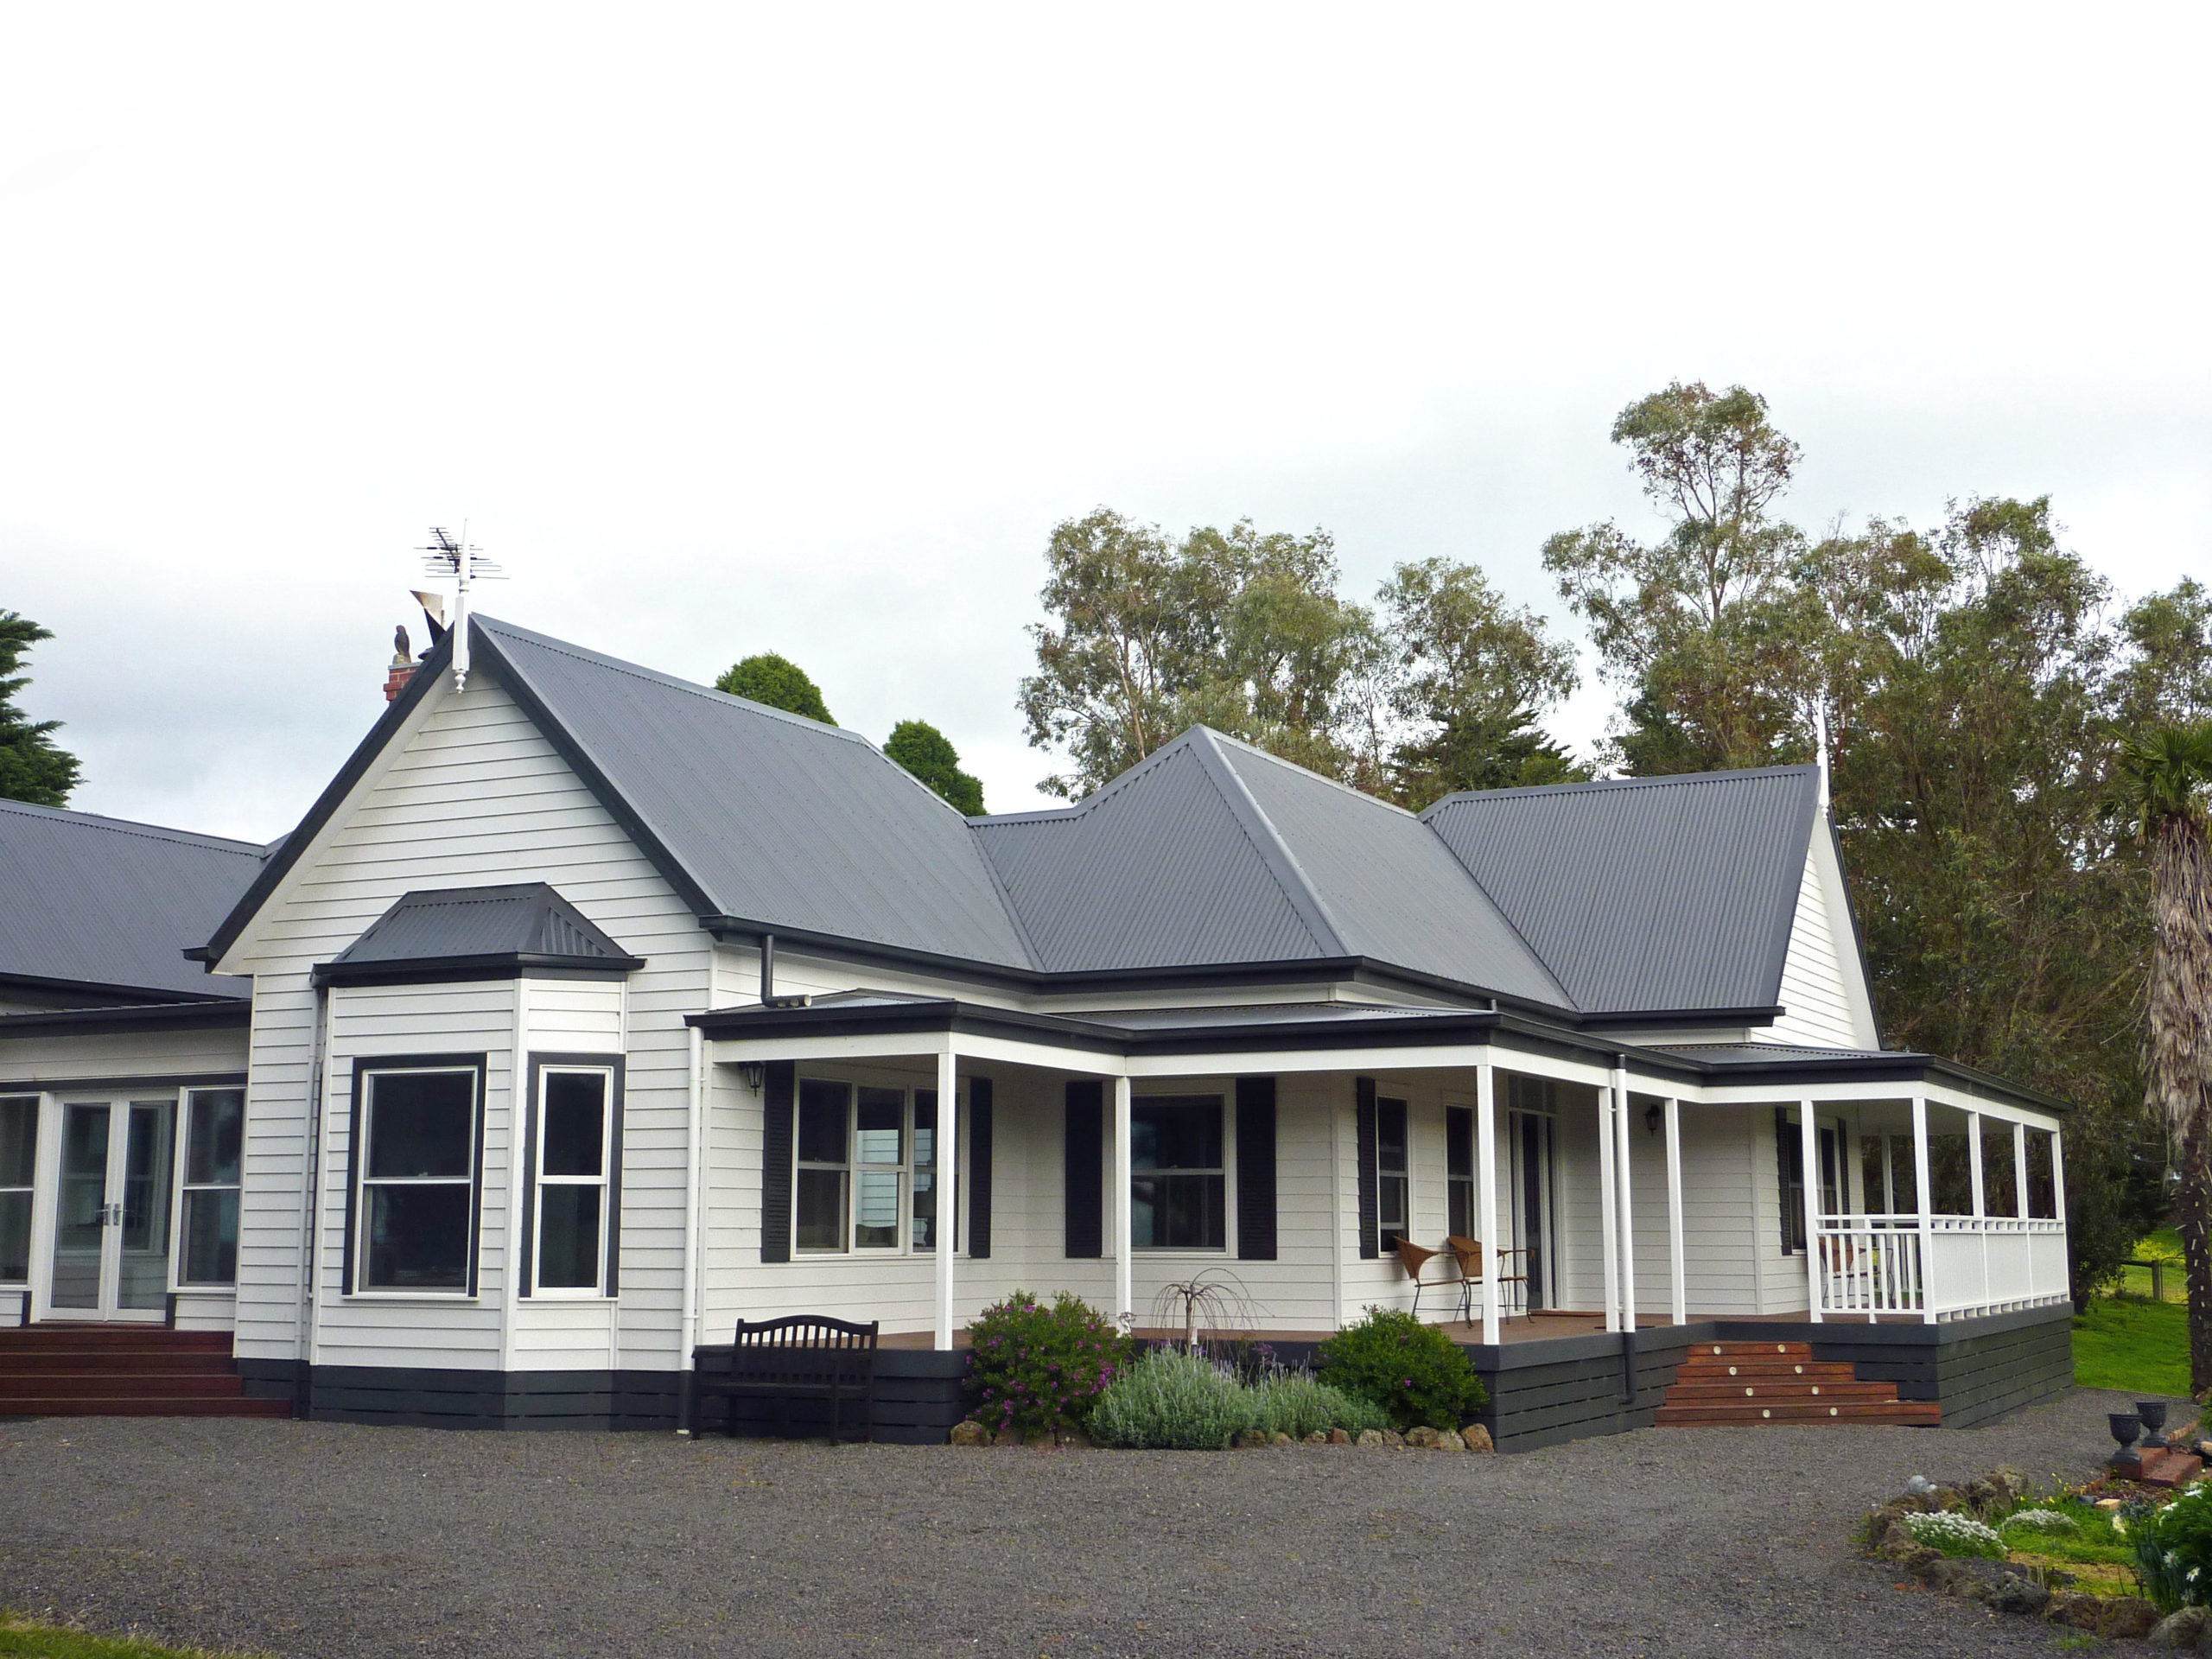 Kilmurray - traditional ranch style homestead built by Farm Houses of Australia